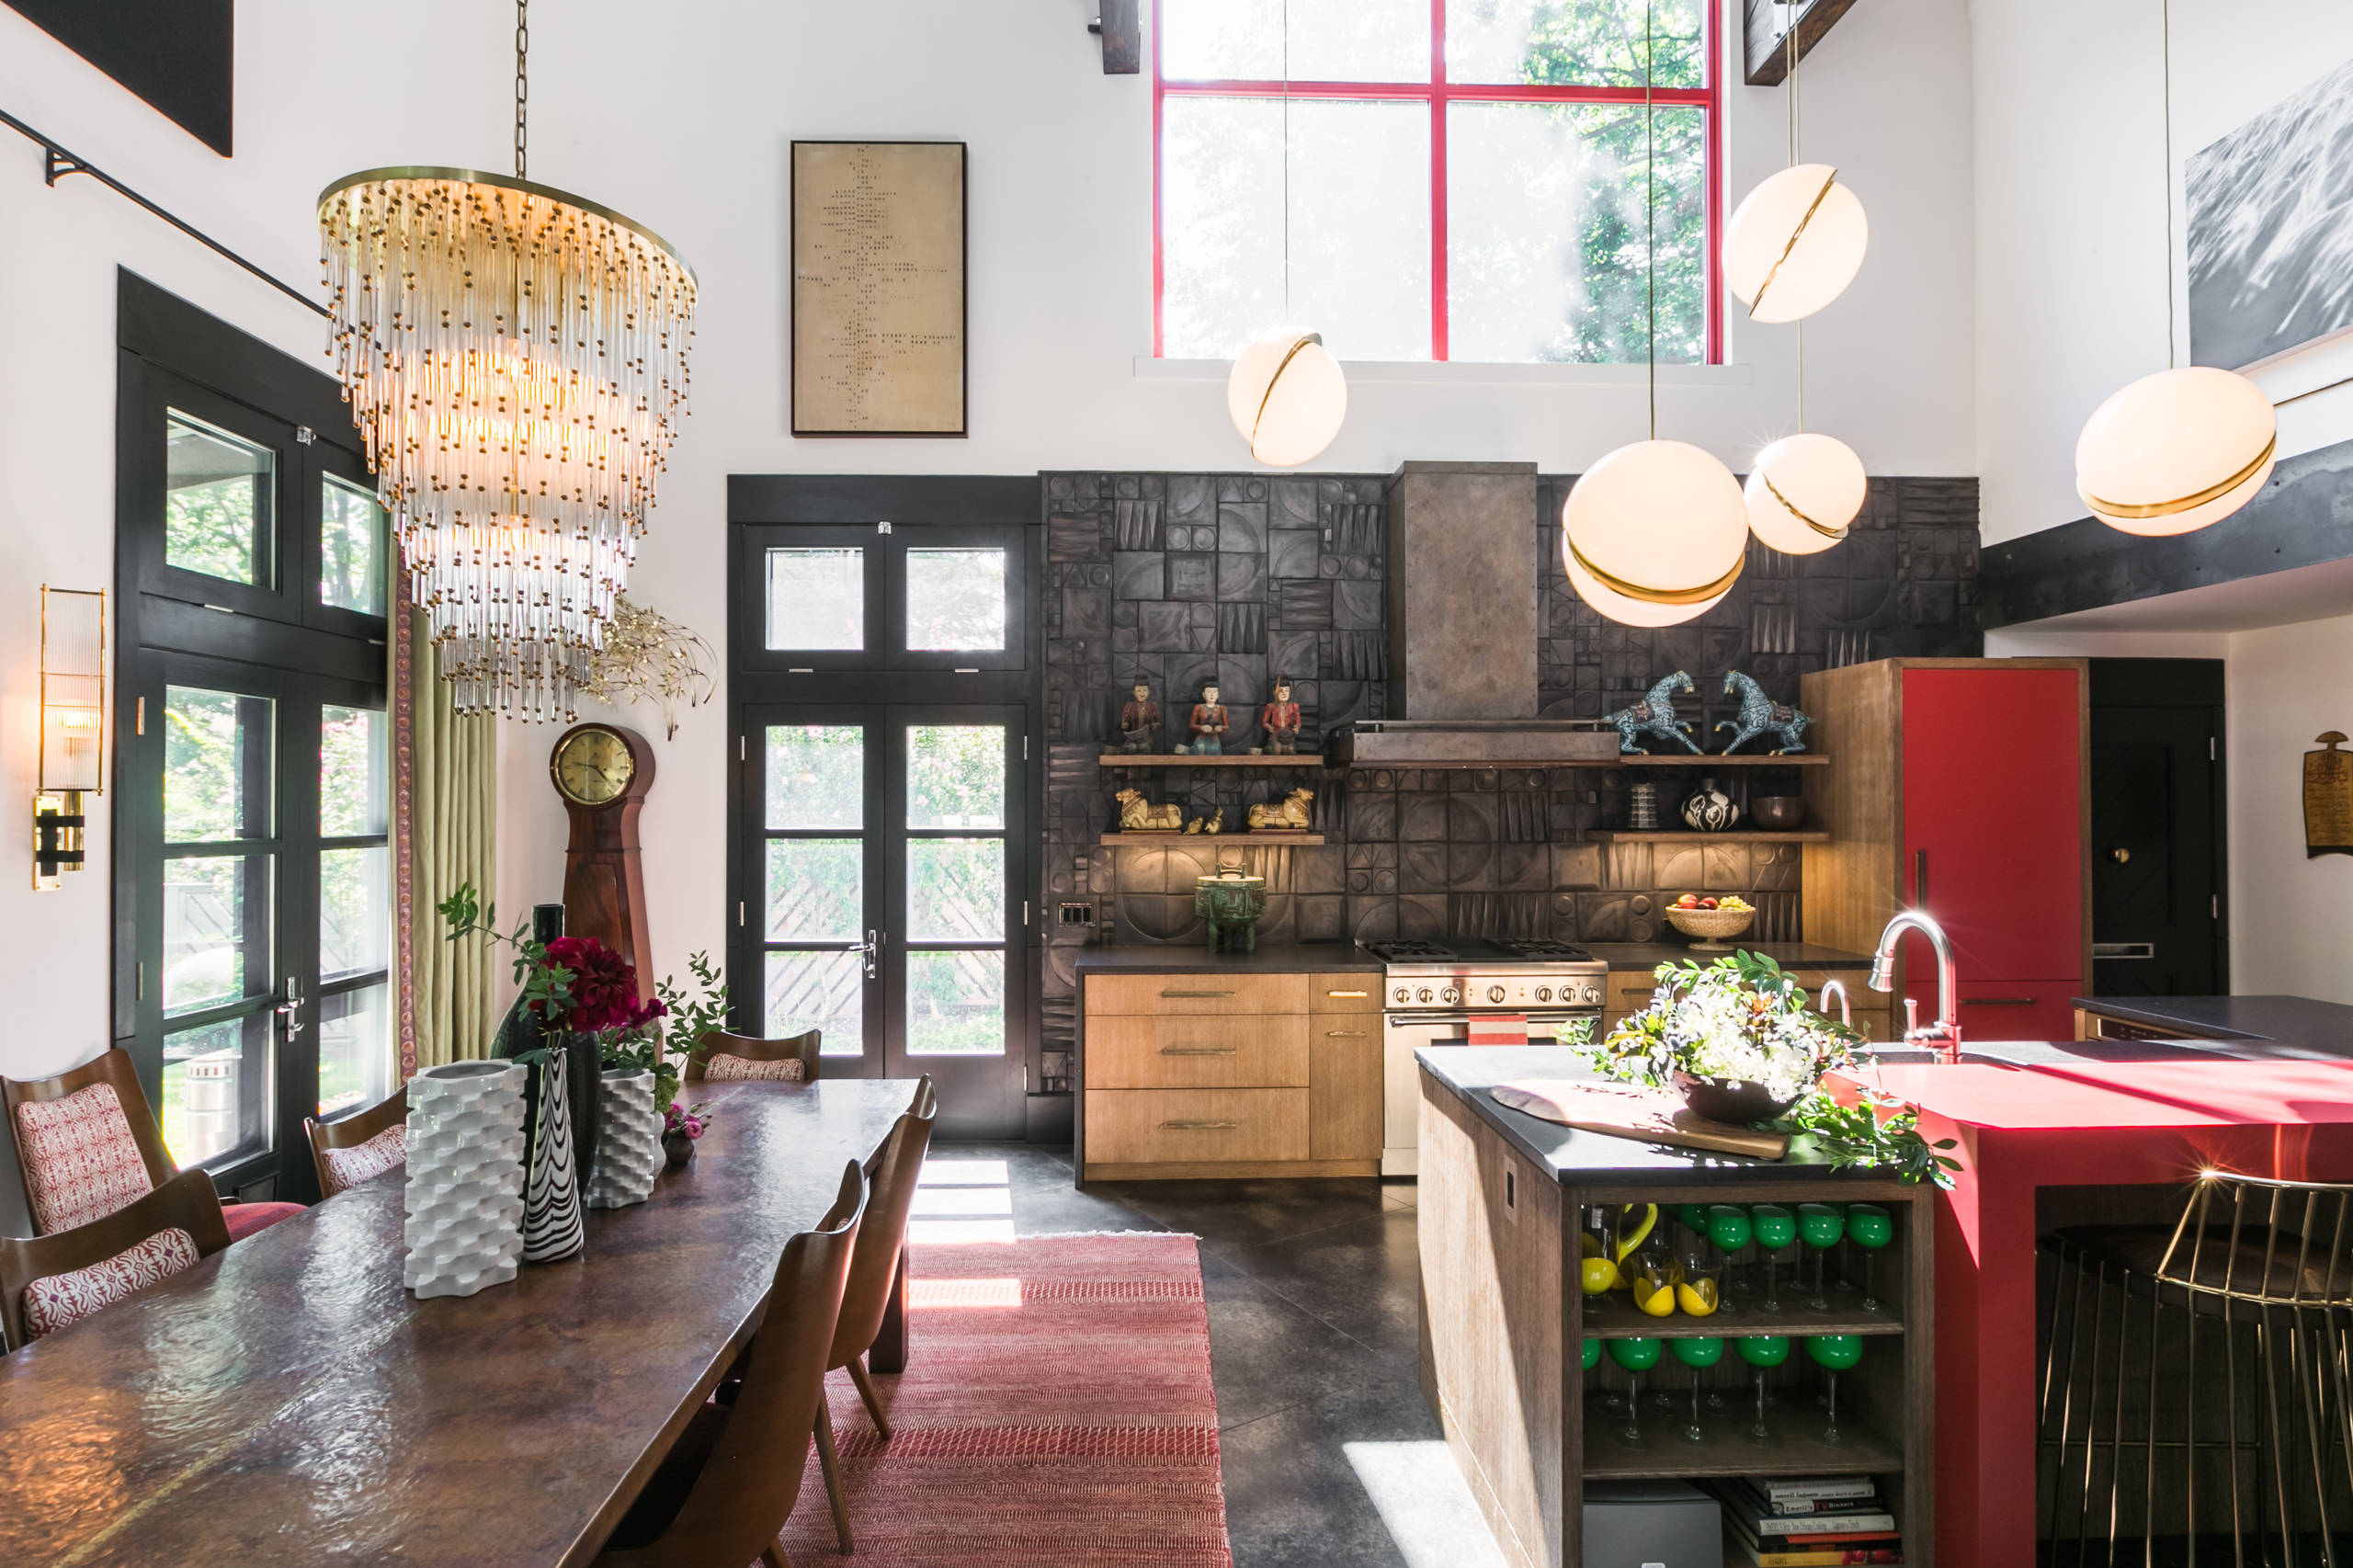 eclectic interiors luxury kitchen designer